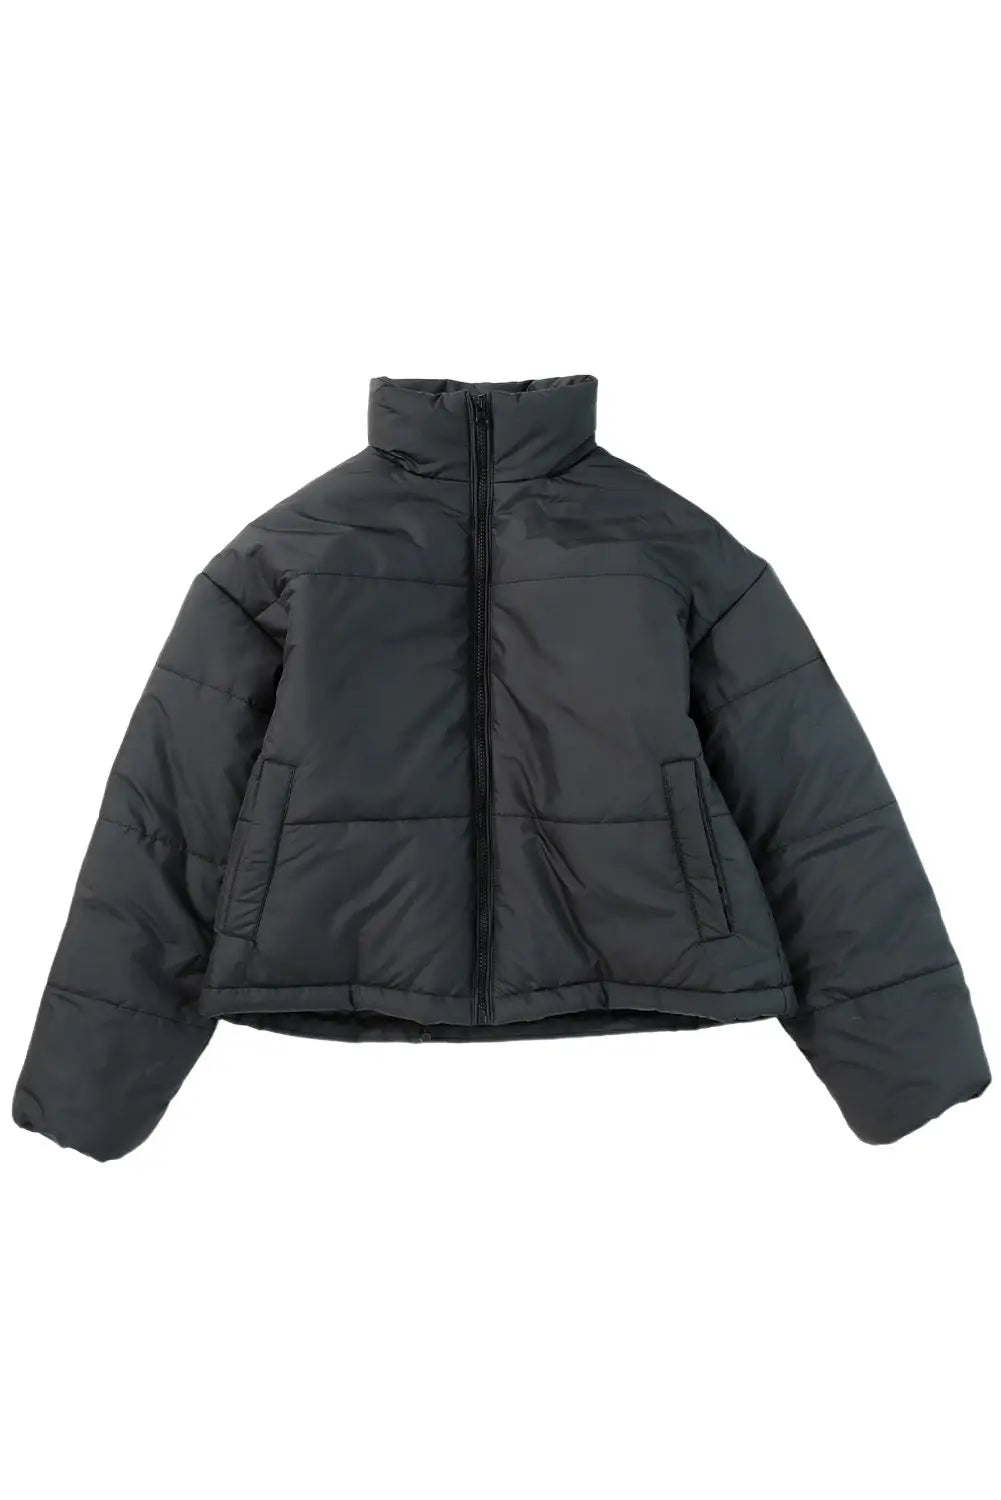 Black zip up drawstring hem puffer coat - coats